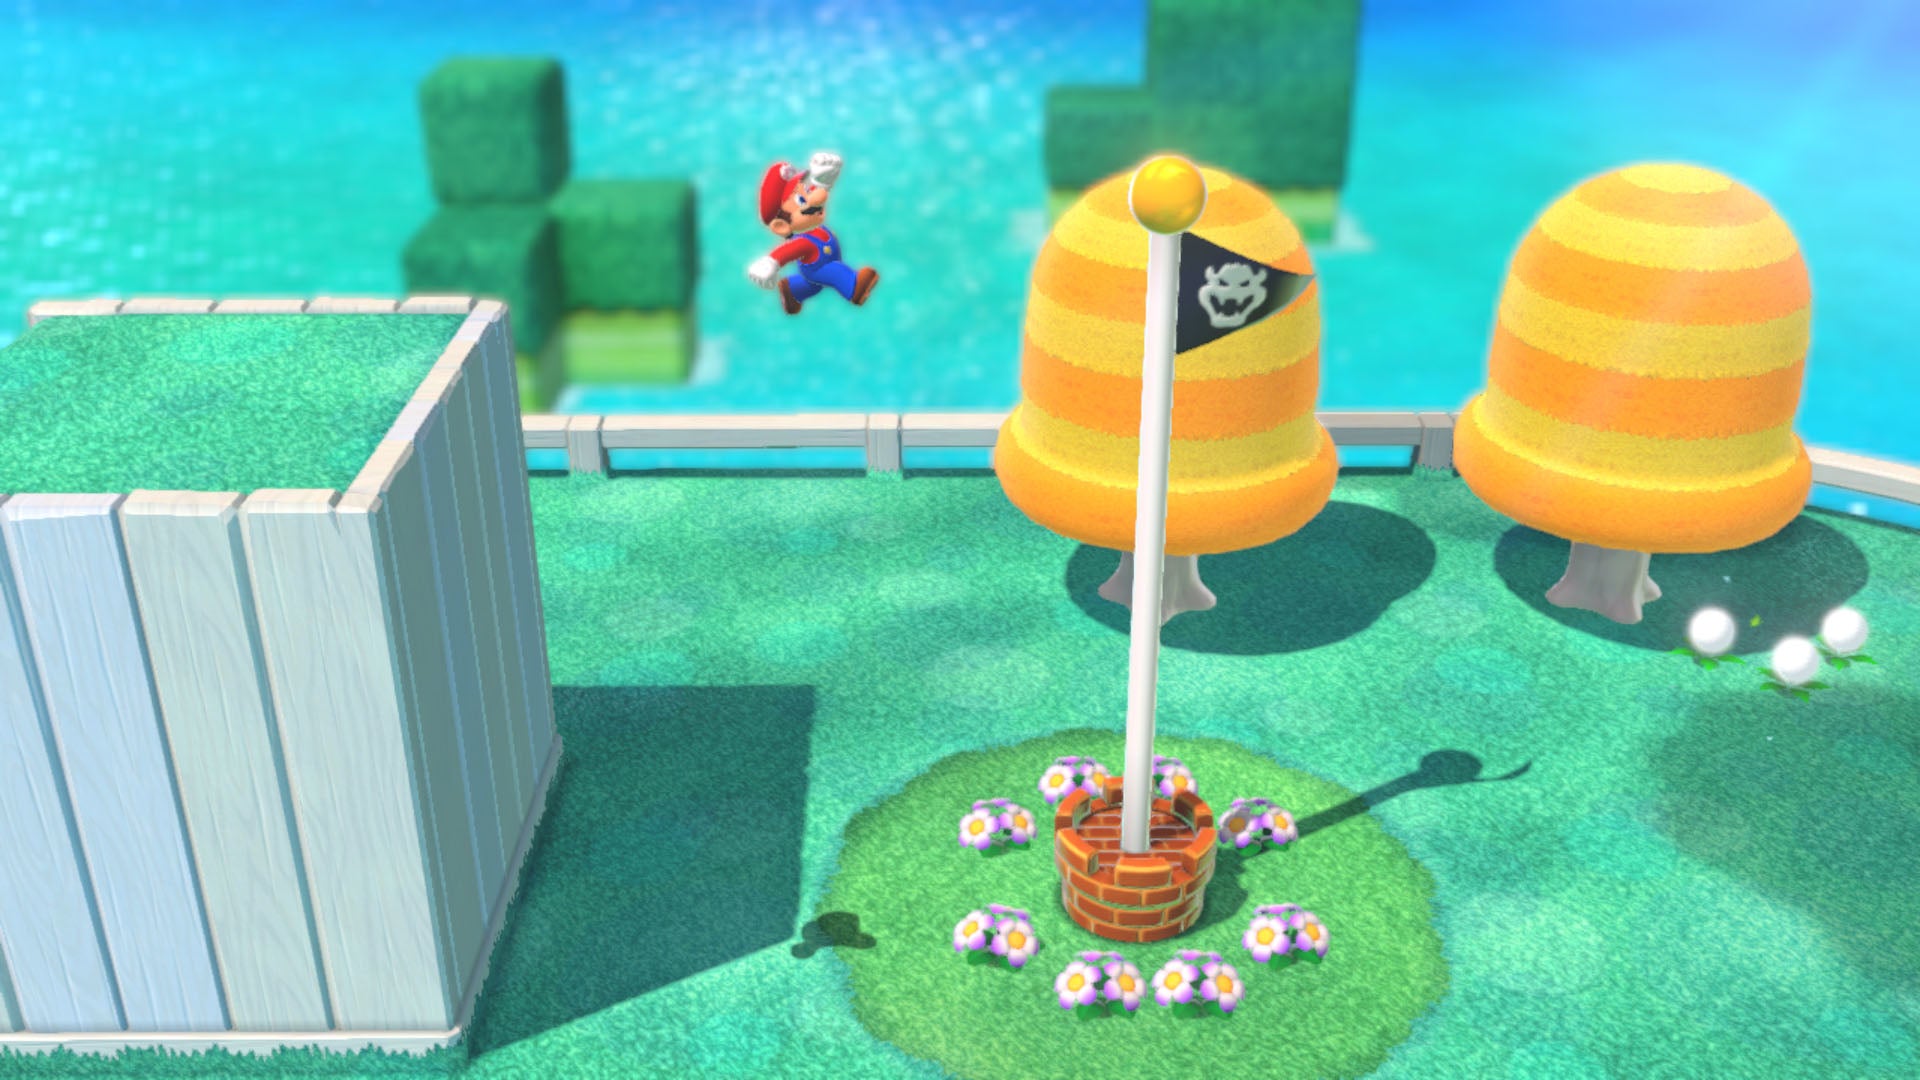 Super Mario 3D World + Bowser’s Fury – Nintendo Switch